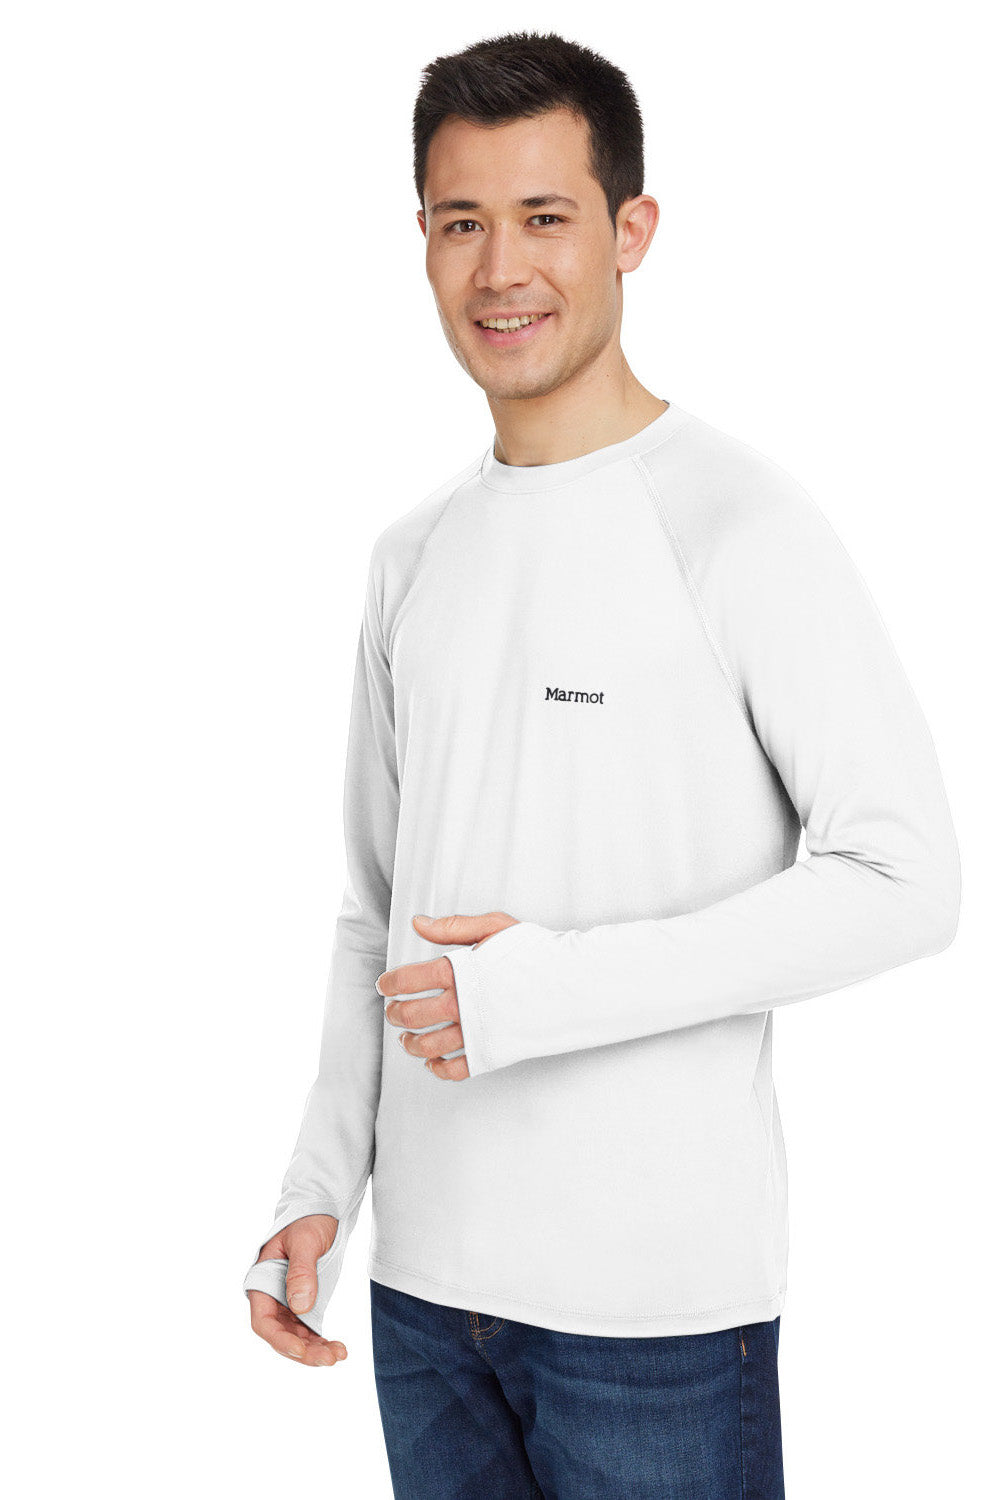 Marmot M14153 Mens Windridge Long Sleeve Crewneck T-Shirt White 3Q